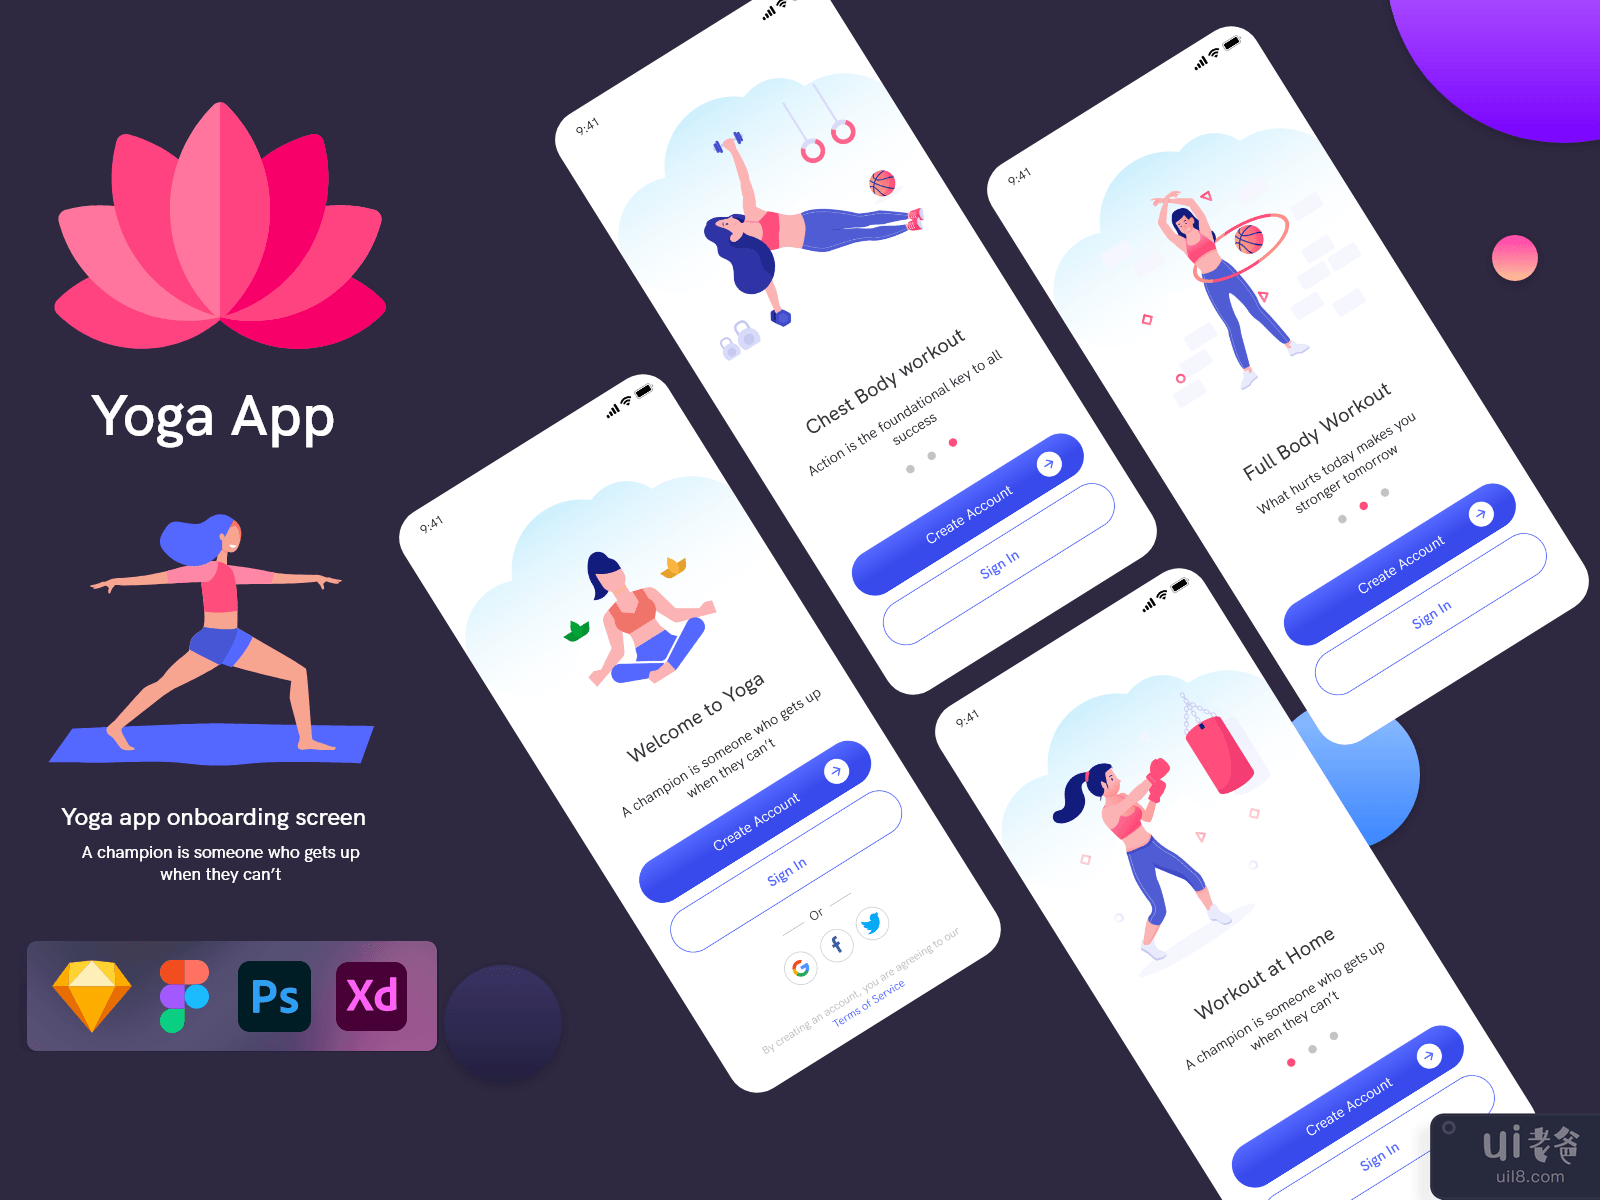 瑜伽应用程序入职概念(Yoga App Onboarding Concept)插图1